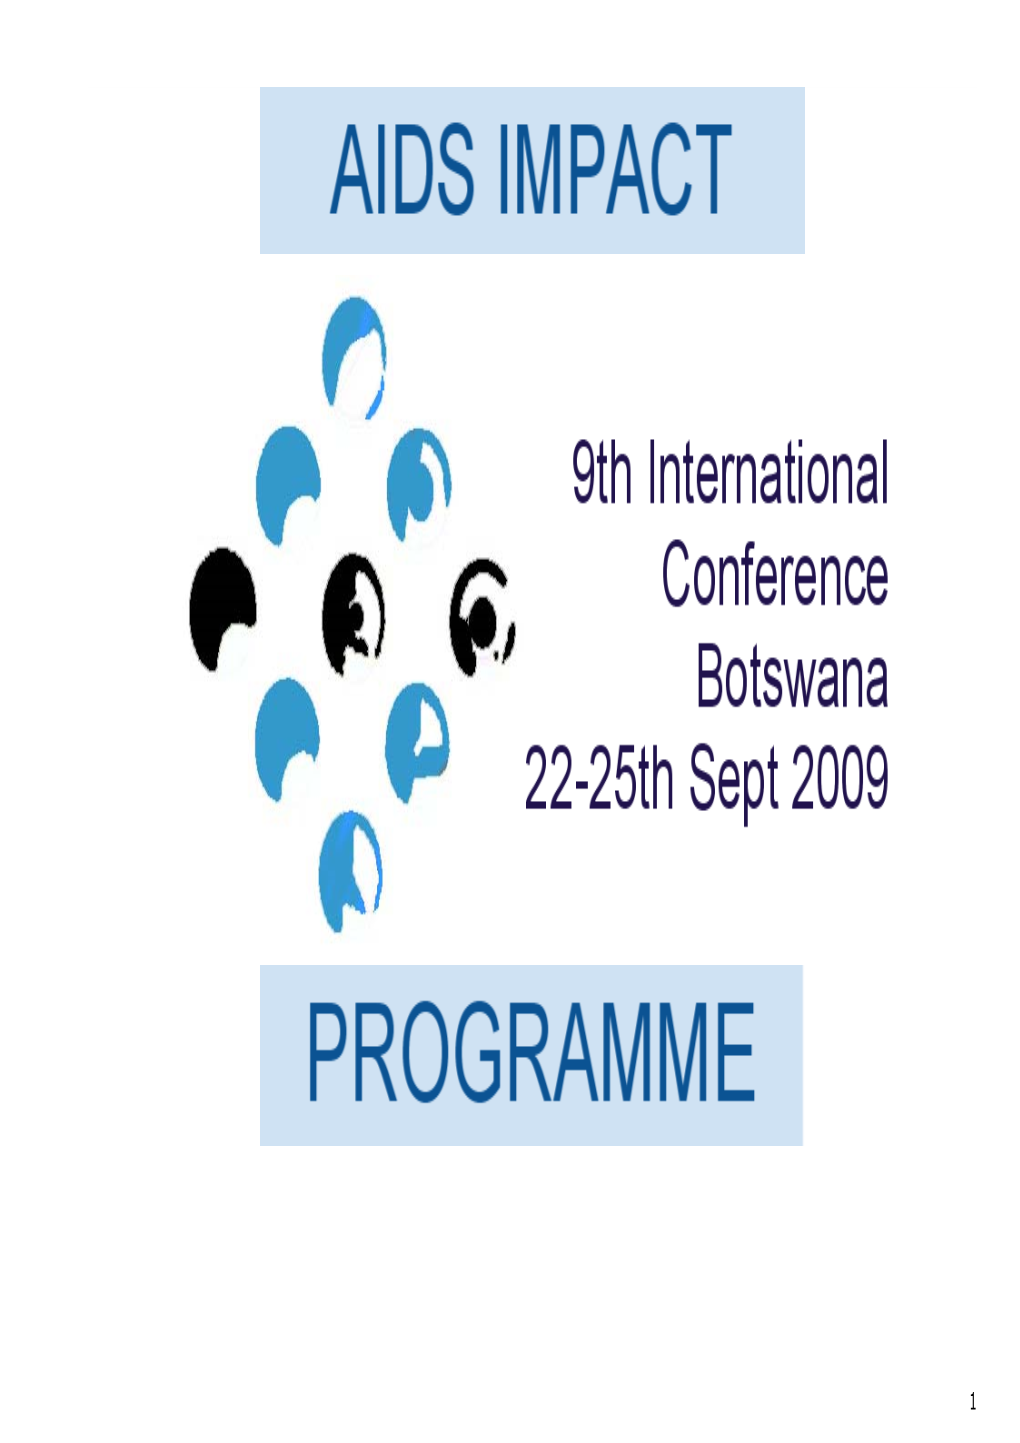 Aidsimpact 2009 Programme